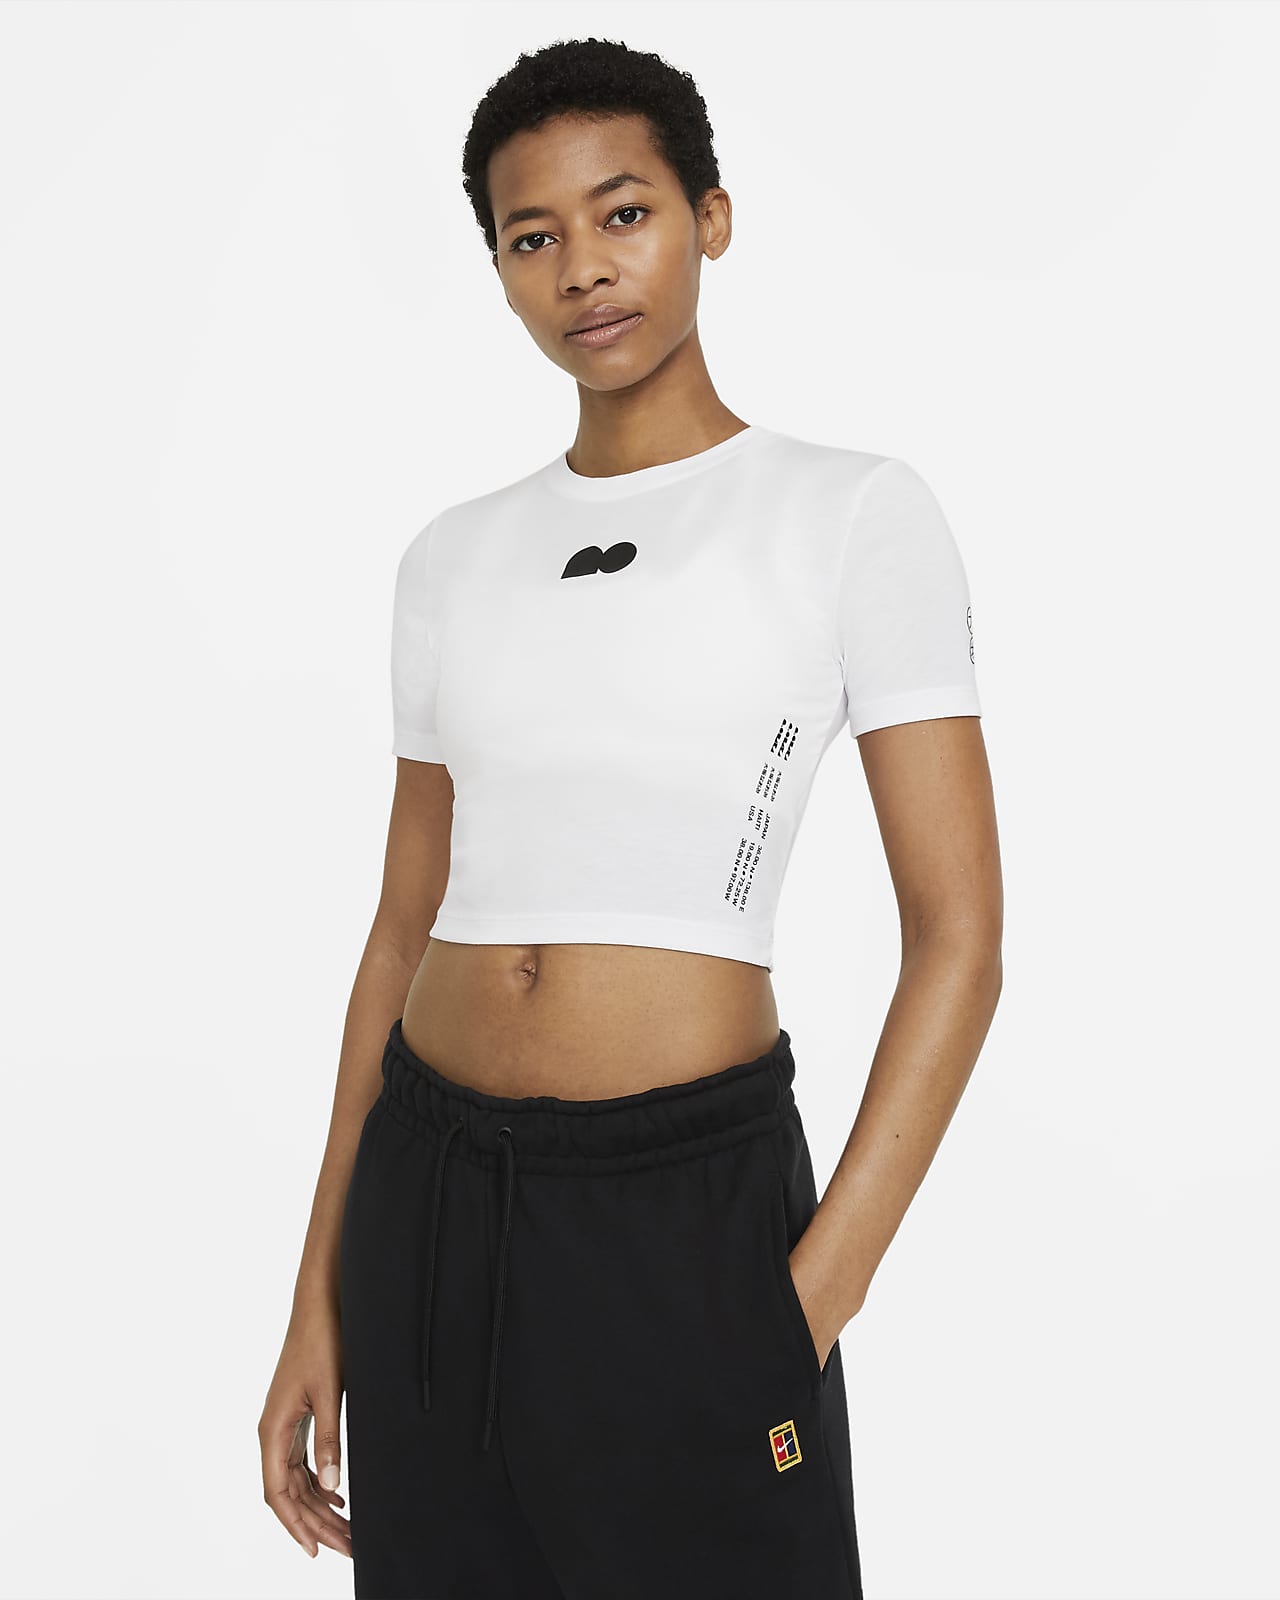 Naomi Osaka Cropped Tennis T Shirt Nike Au